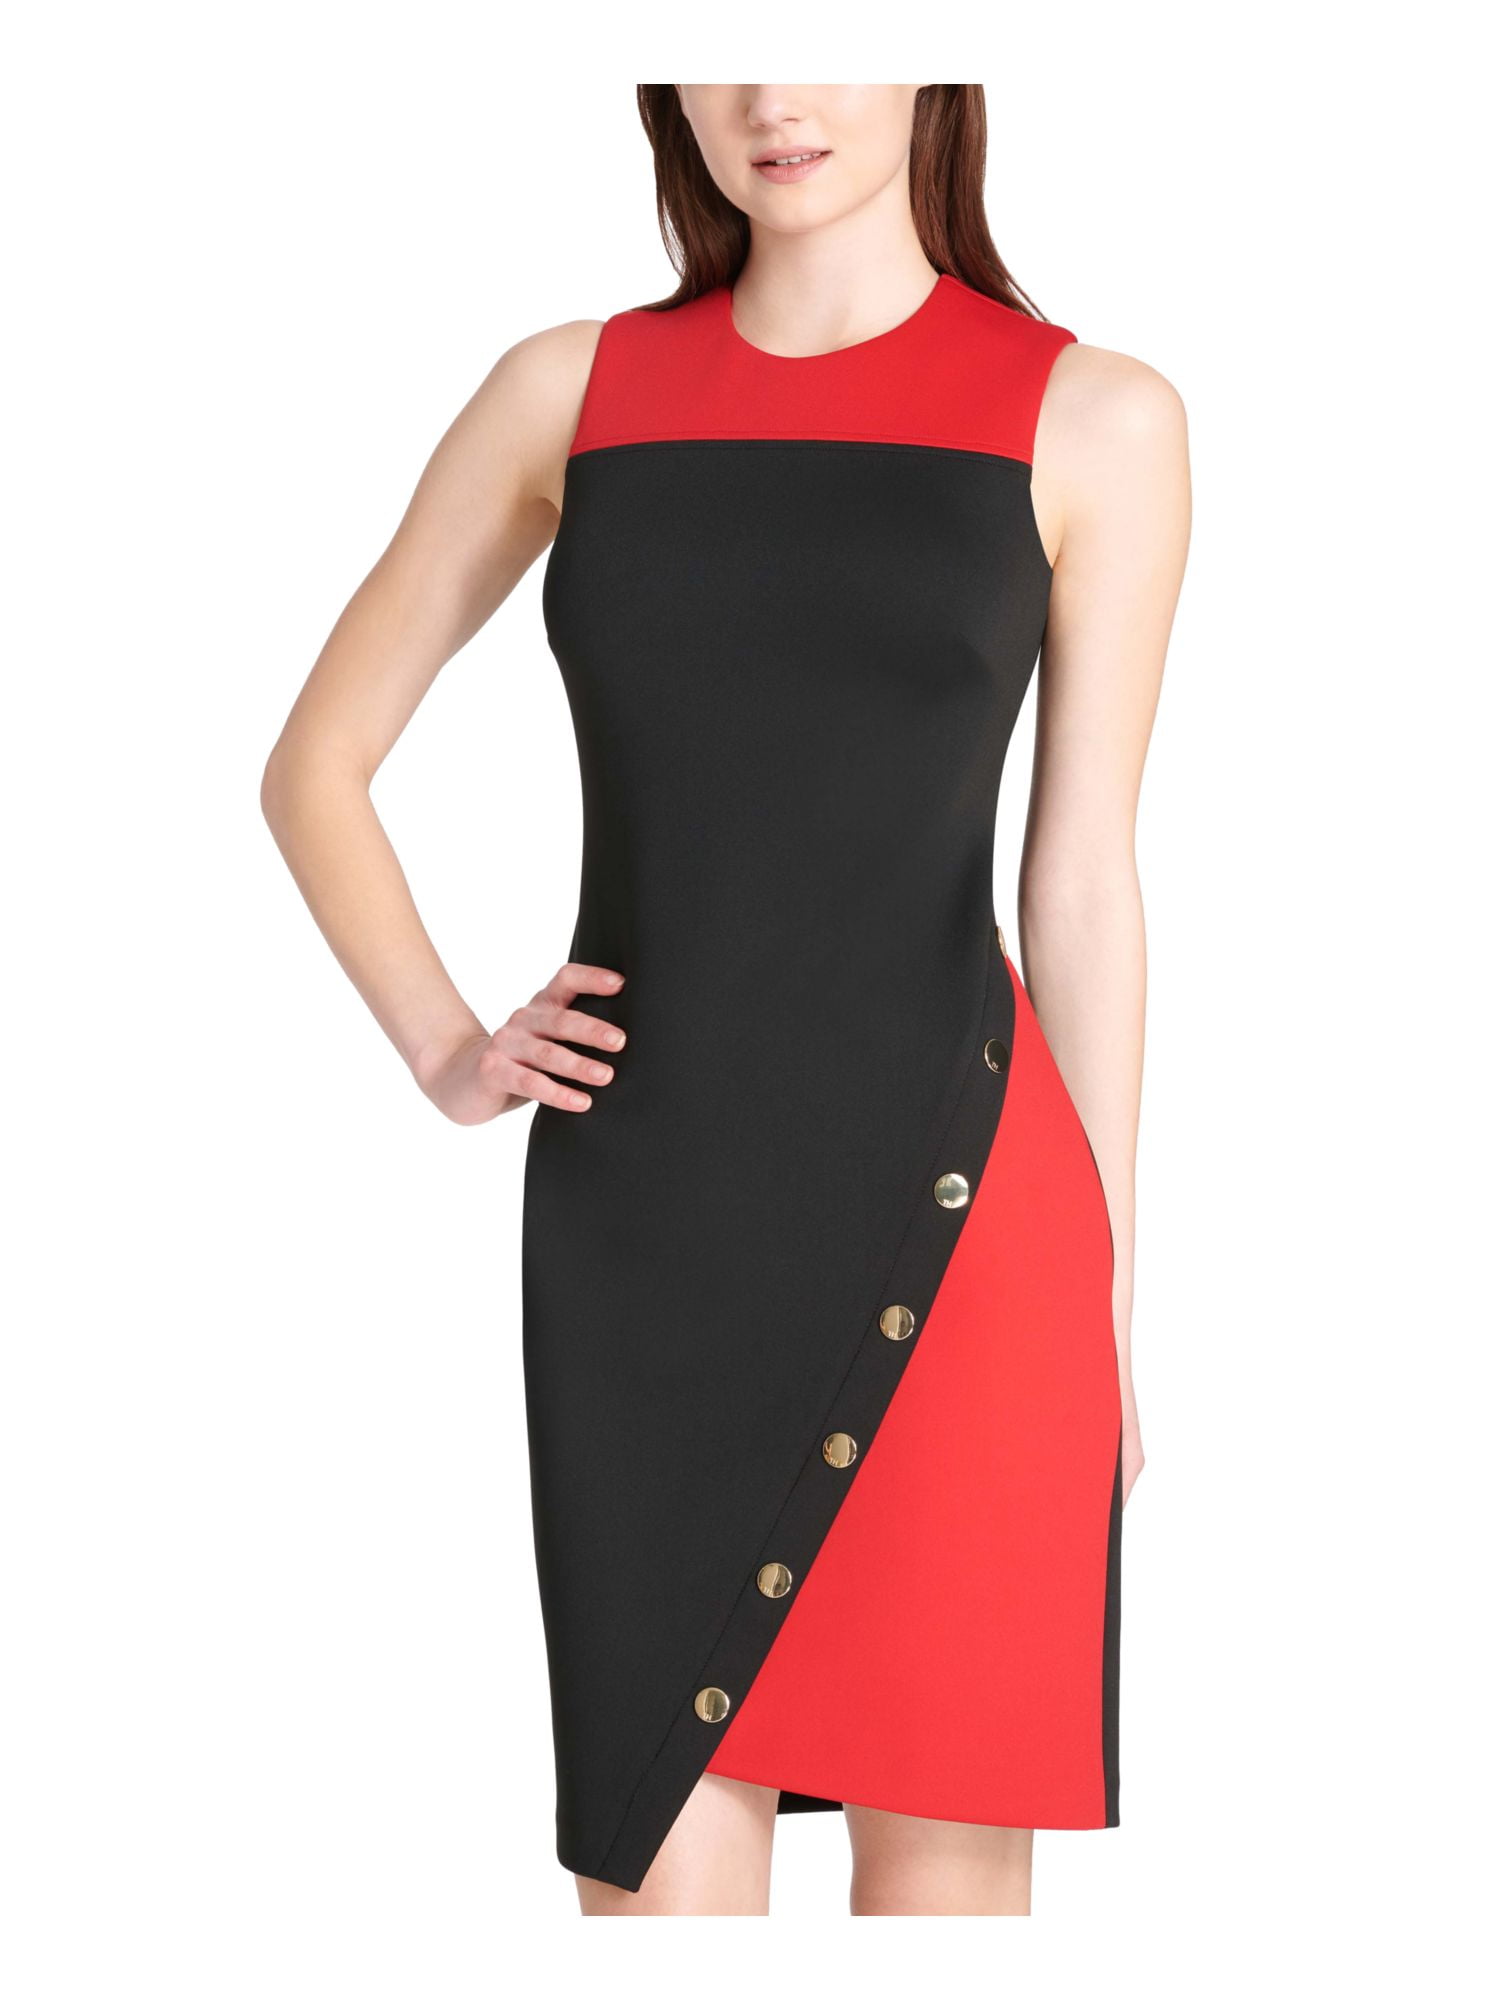 Fit B+B + Block Flare $99 TOMMY HILFIGER Dress 8 Embellished Red Color Womens